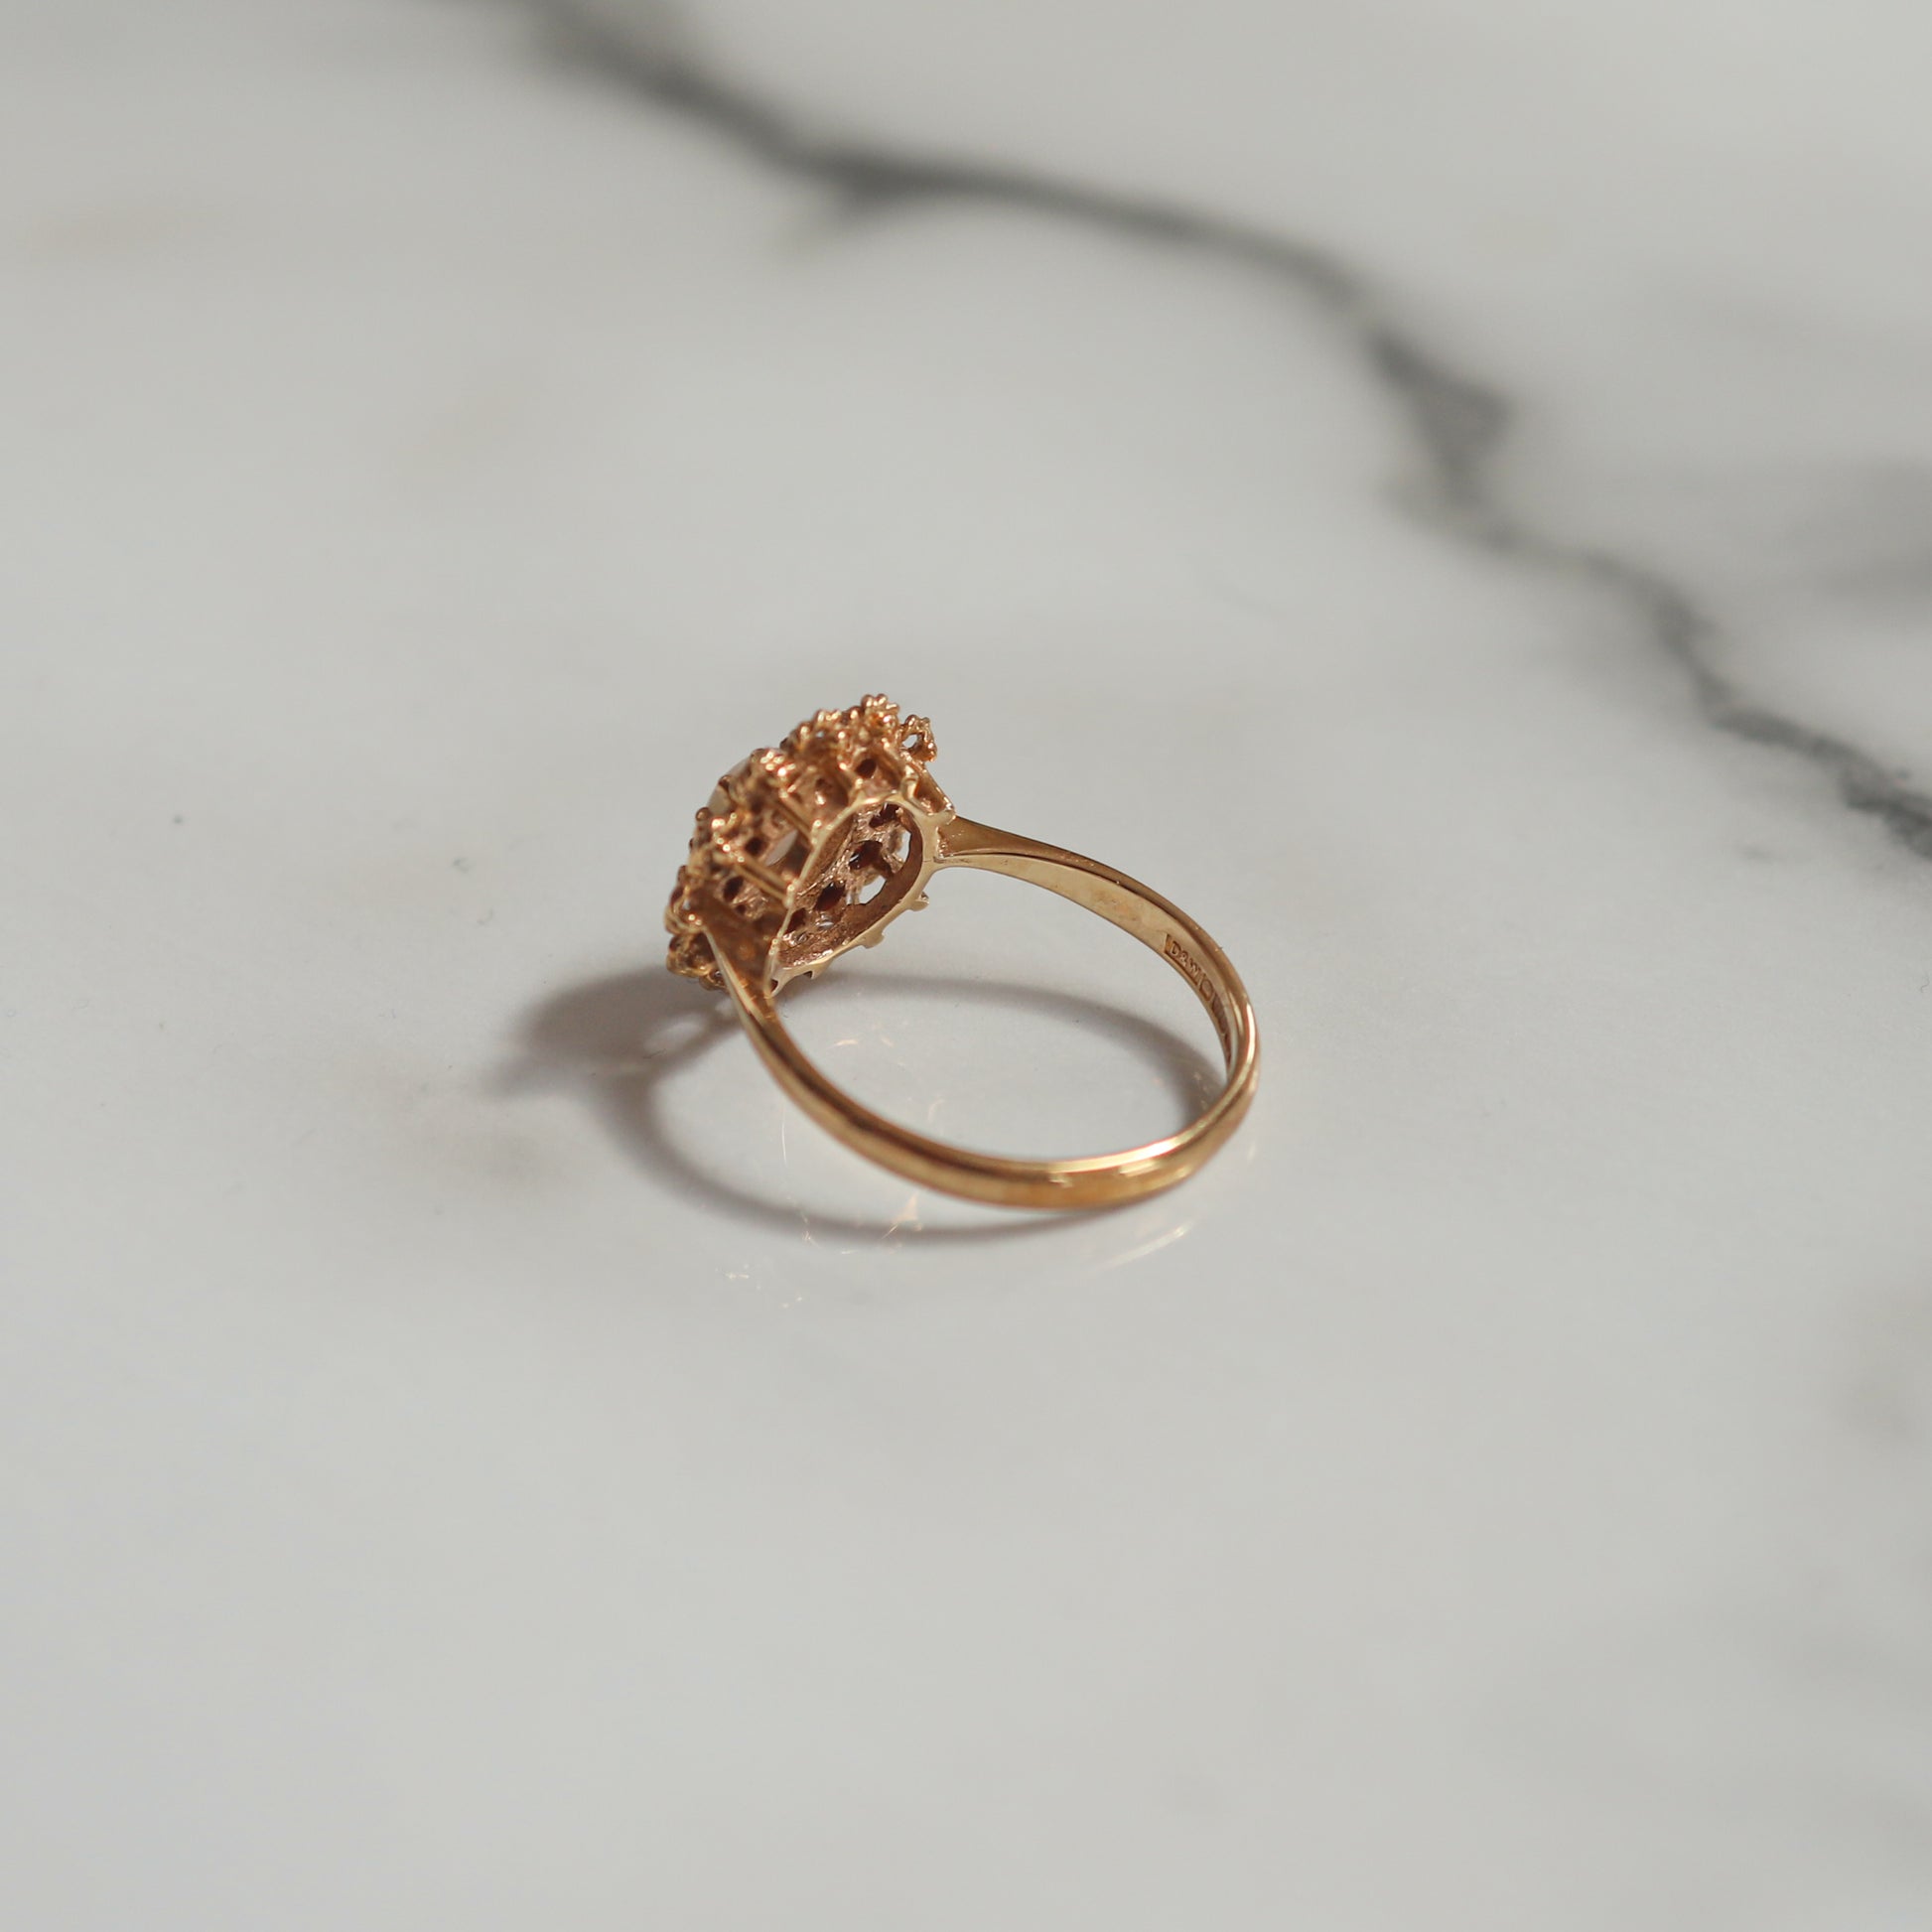 Vintage Lottie Opal & Garnet Cluster Ring | Size P | Solid 9ct Gold